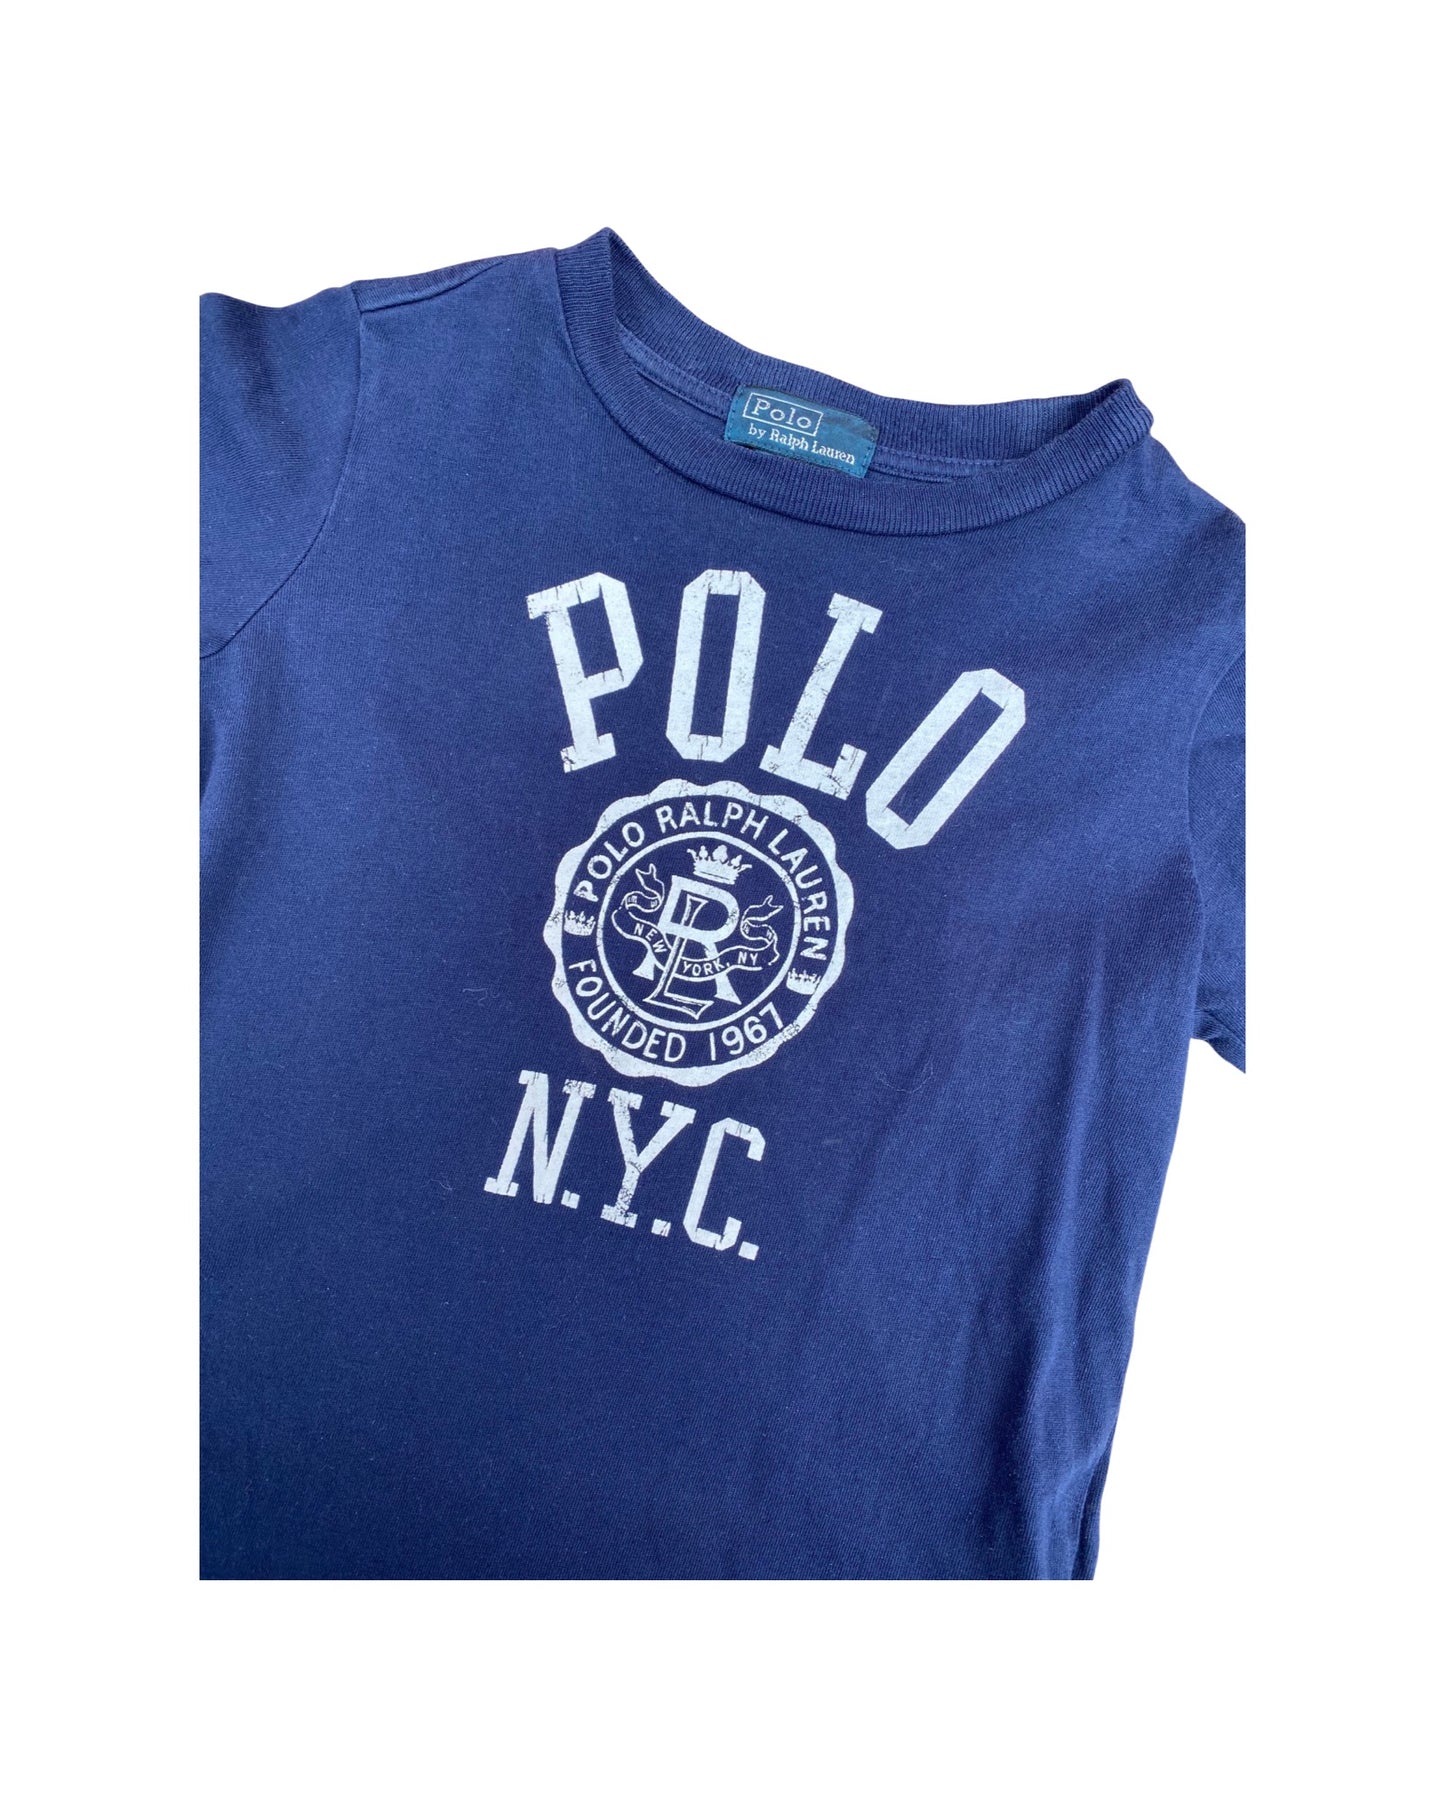 Ralph Lauren Polo NYC top (2-3yrs)